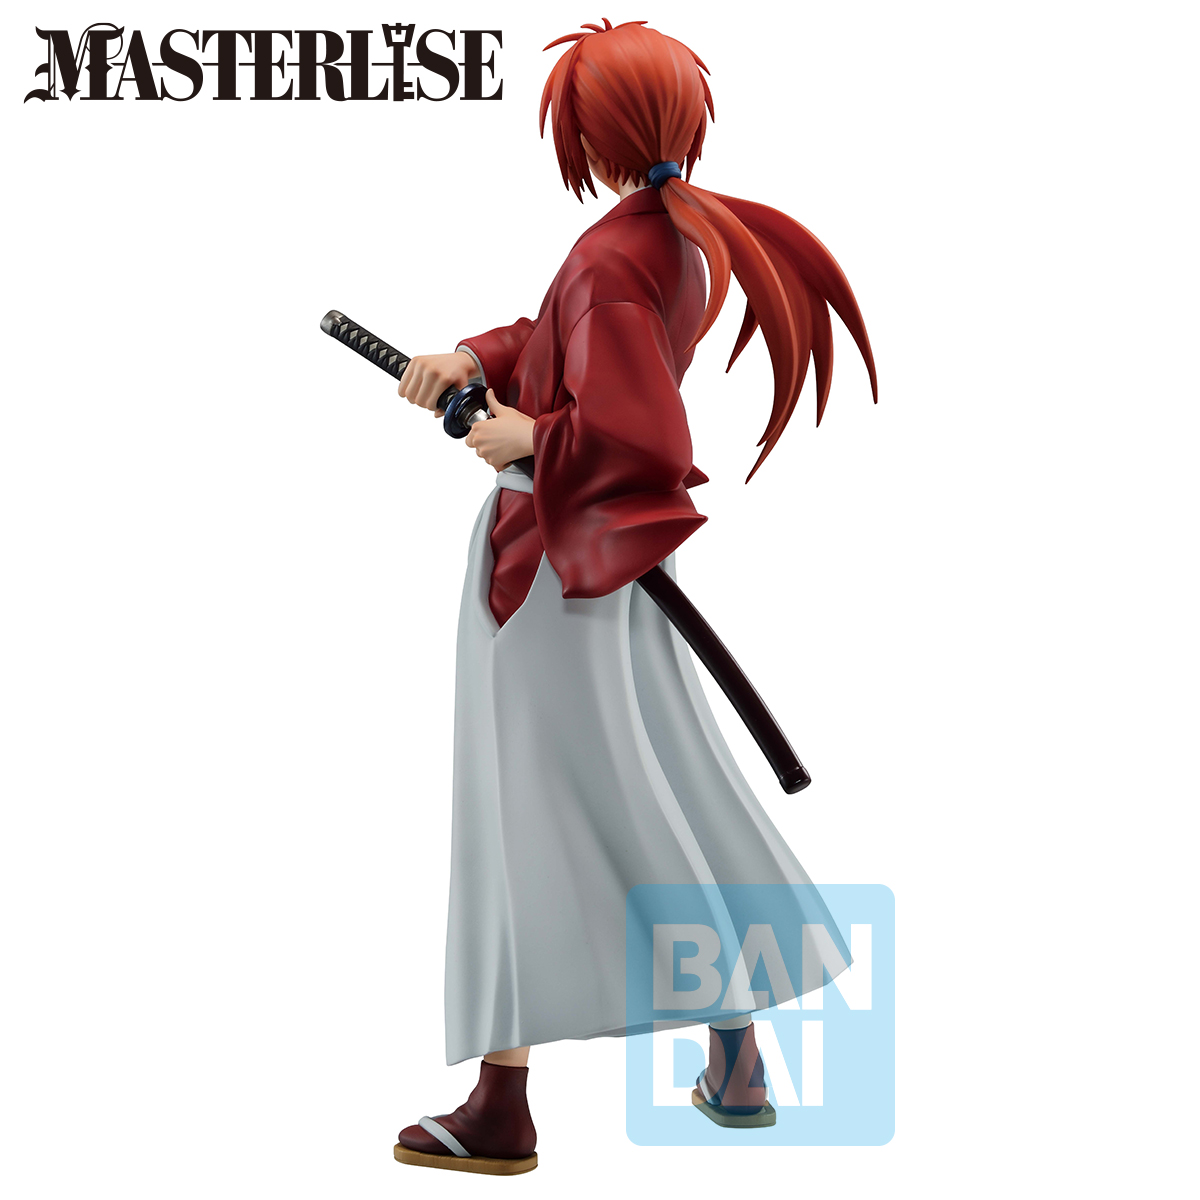 Kenshin Himura Action Figure, Rurouni Kenshin Figure